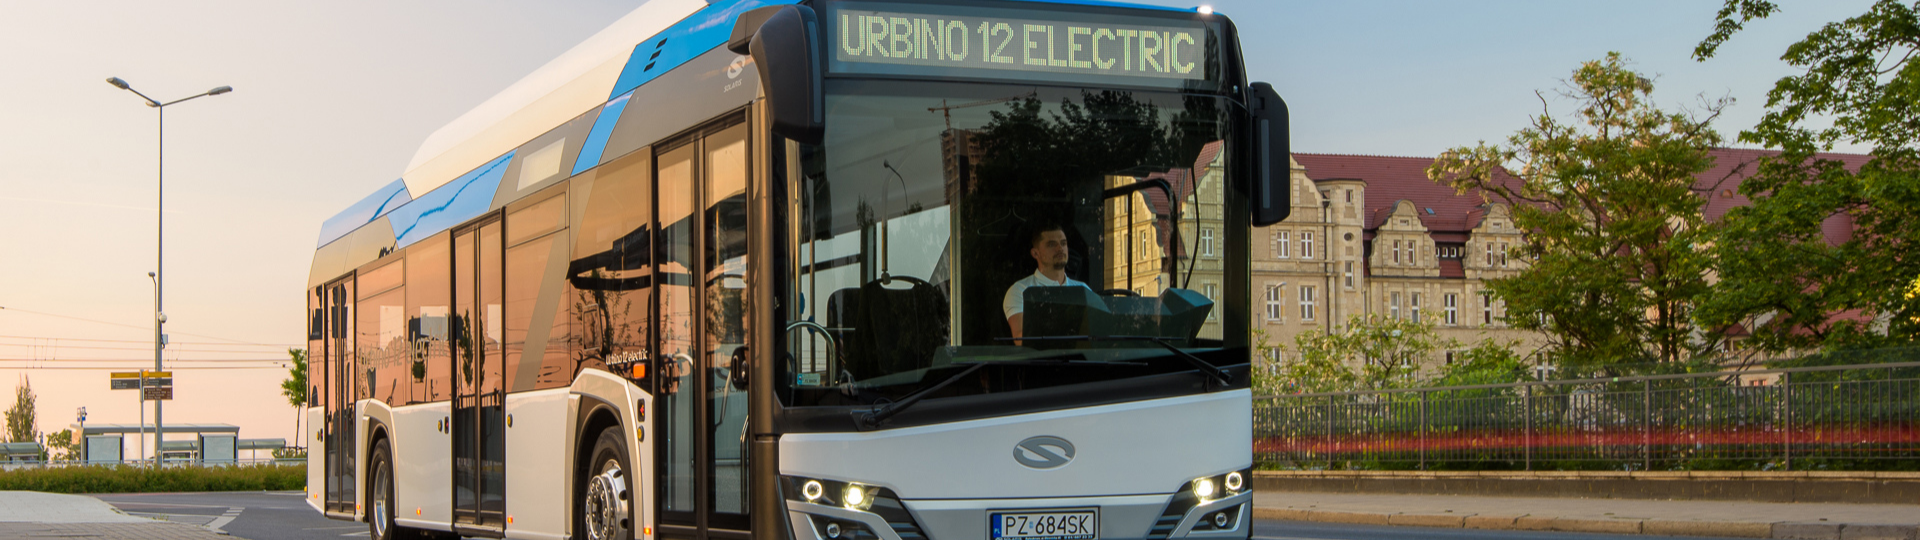 Zakopane enhances its eco-friendly municipal transport with zero-emission Urbino 12 electric buses